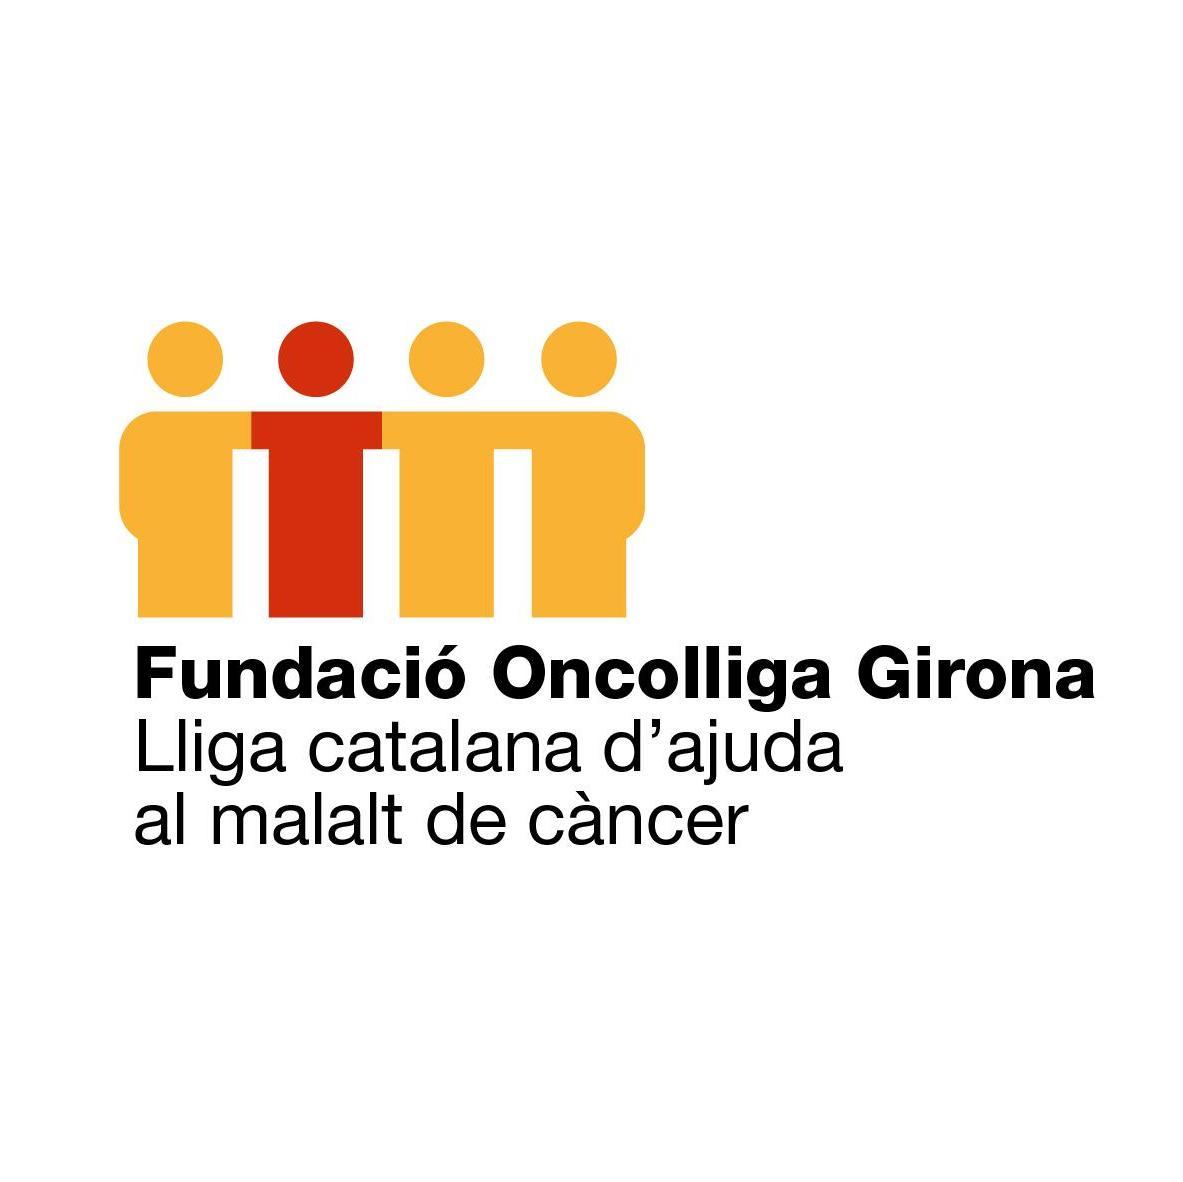 Fundació Oncolliga Girona - Su perfil. Votar, valora y comunicate